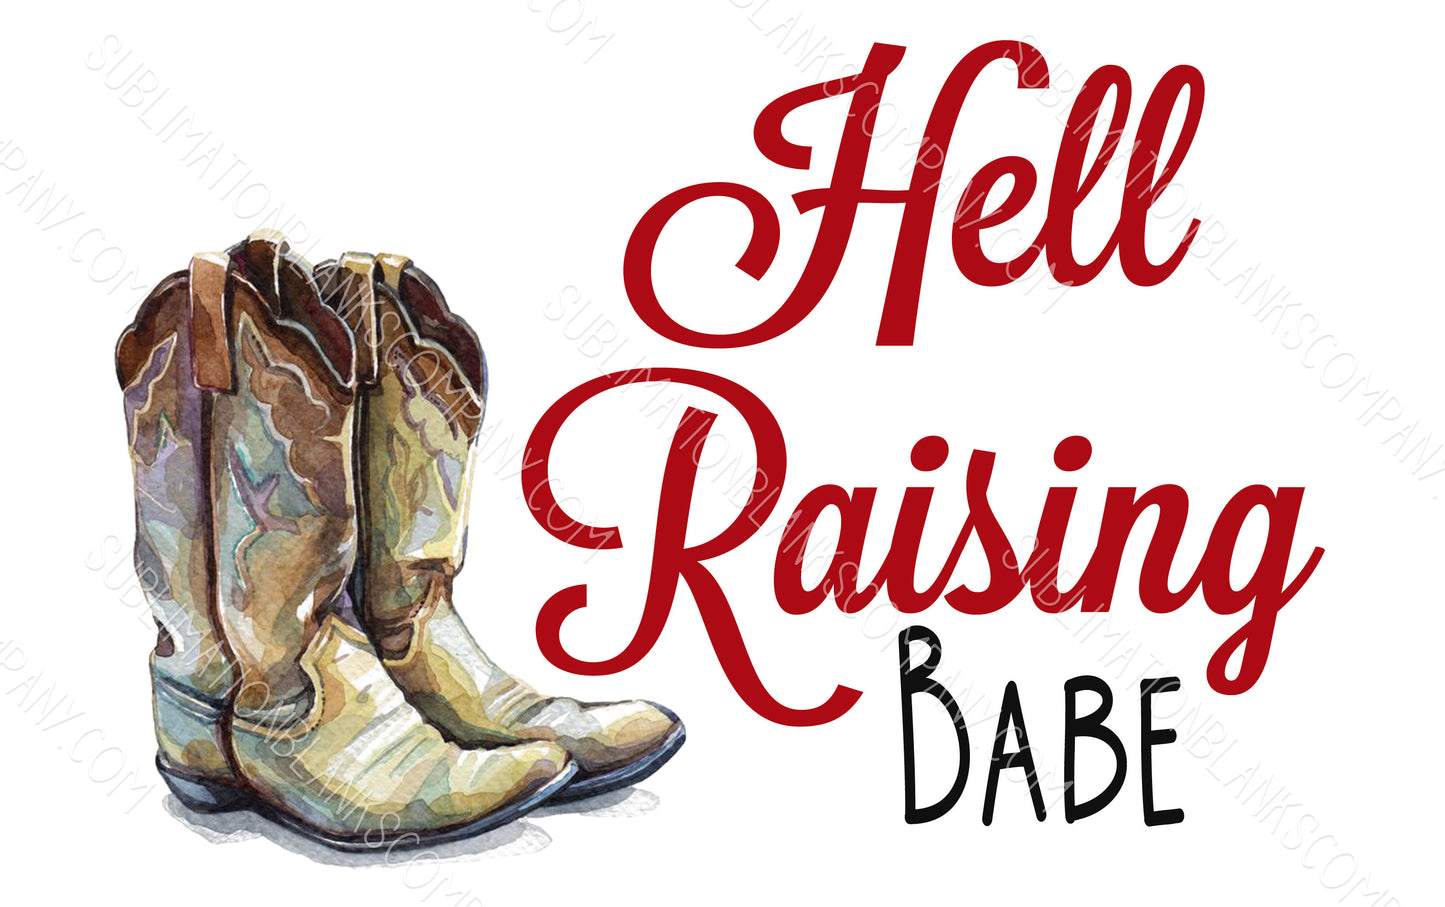 Hell Raising Babe .png digital download artwork